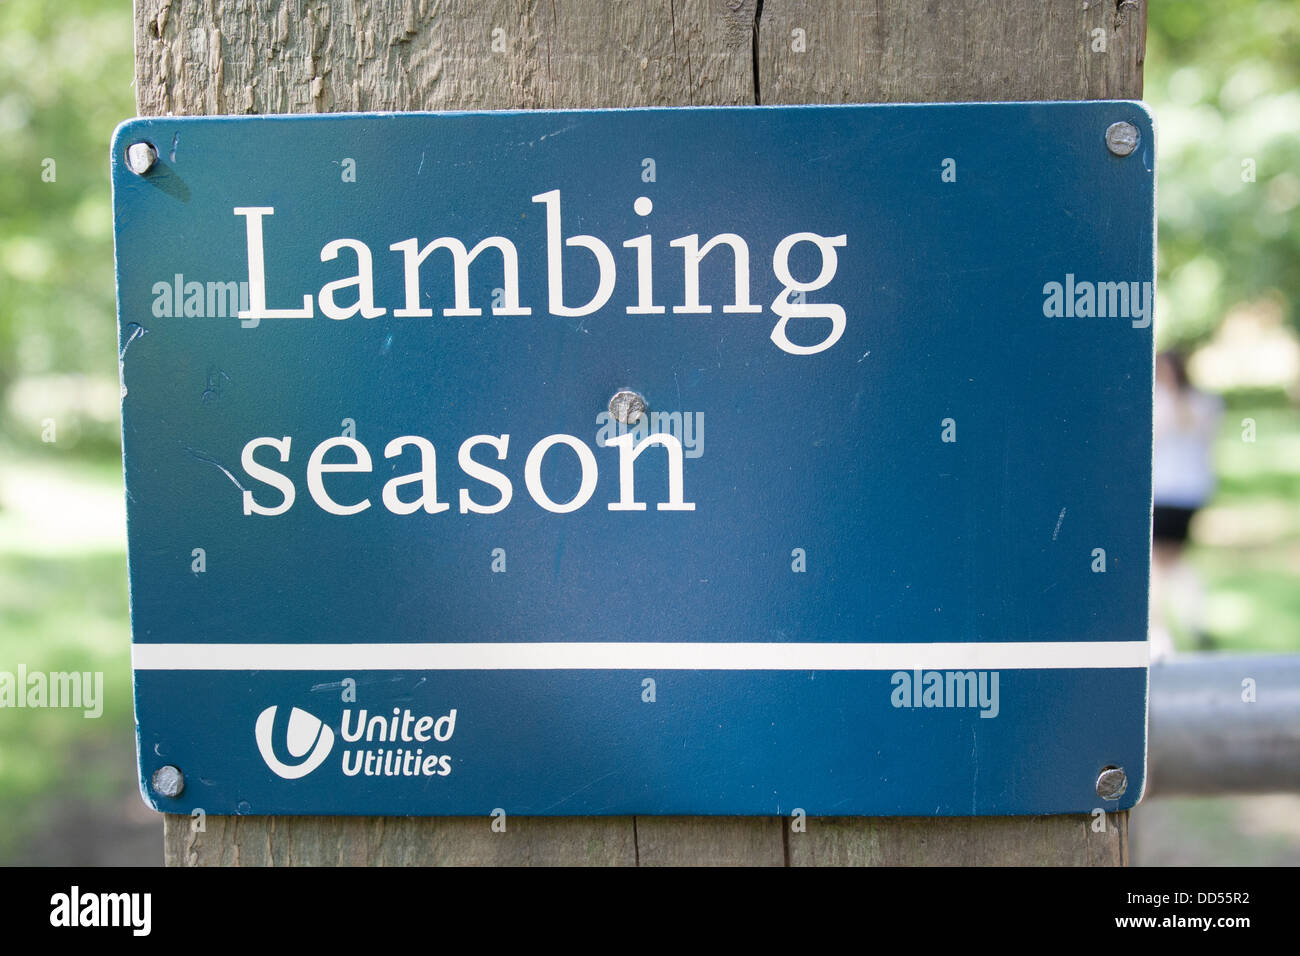 lambing season sign Stock Photo